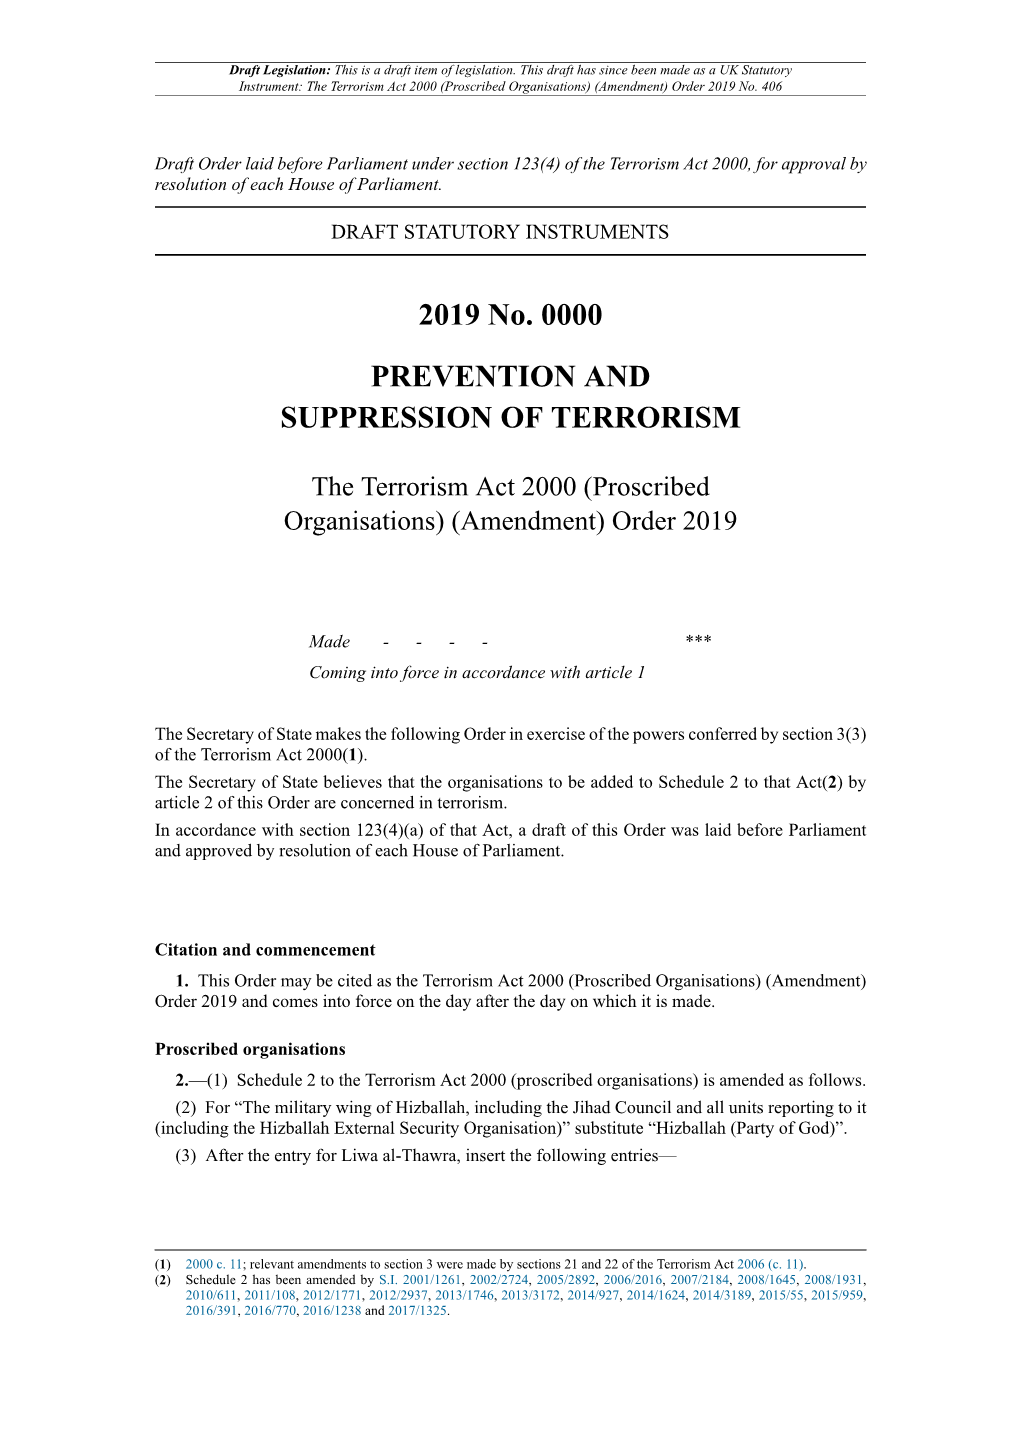 The Terrorism Act 2000 (Proscribed Organisations) (Amendment) Order 2019 No